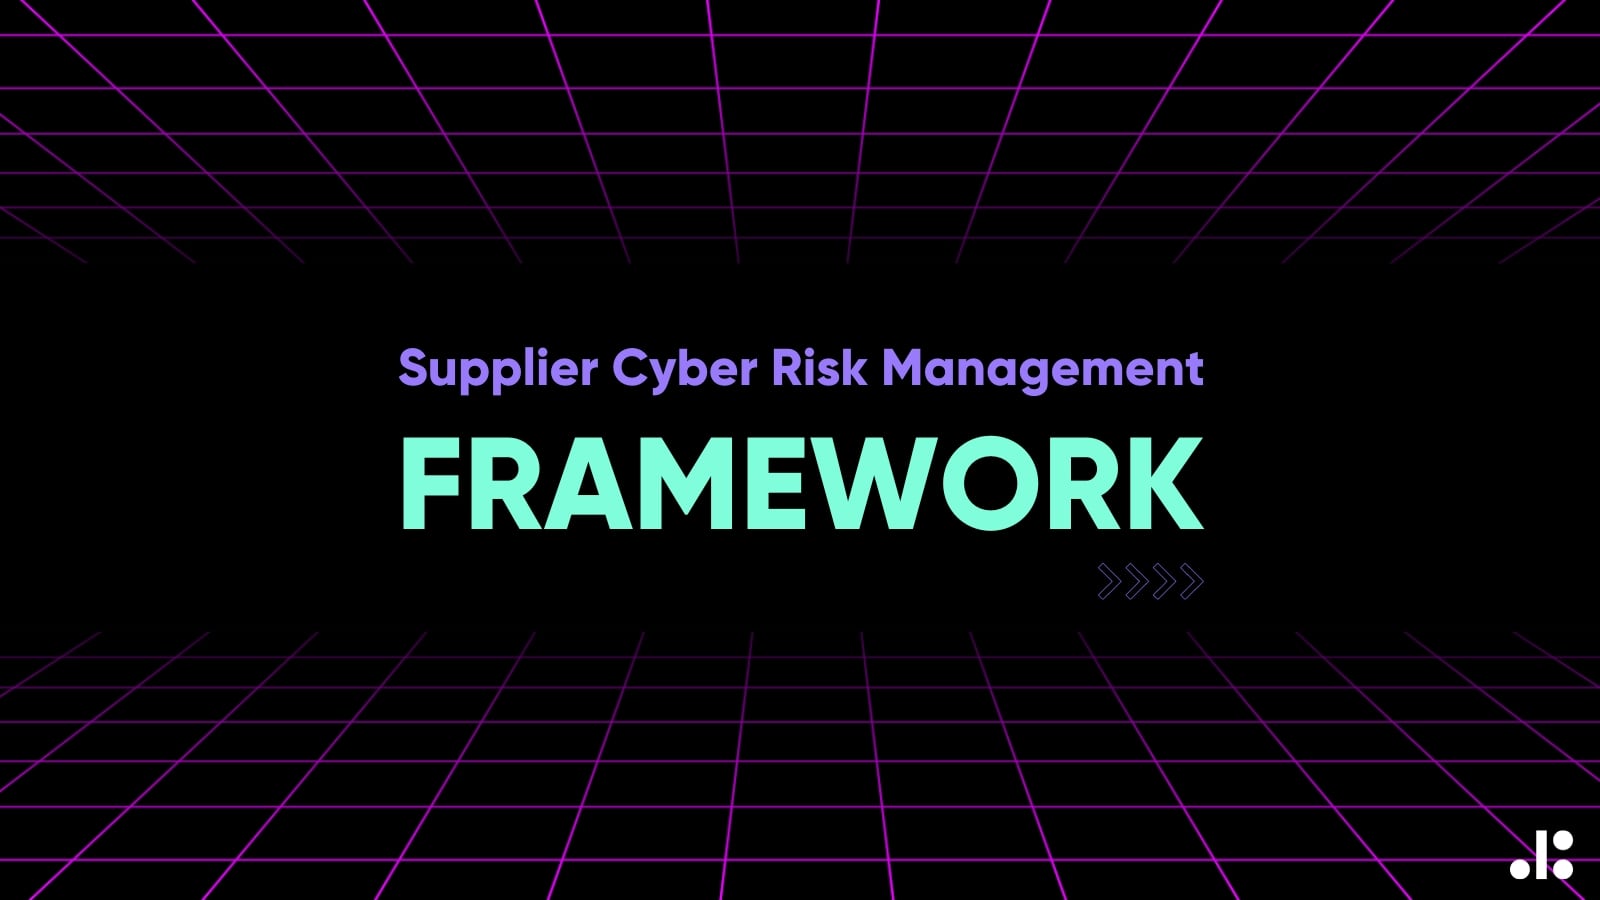 Supplier Cyber Risk Management Framework